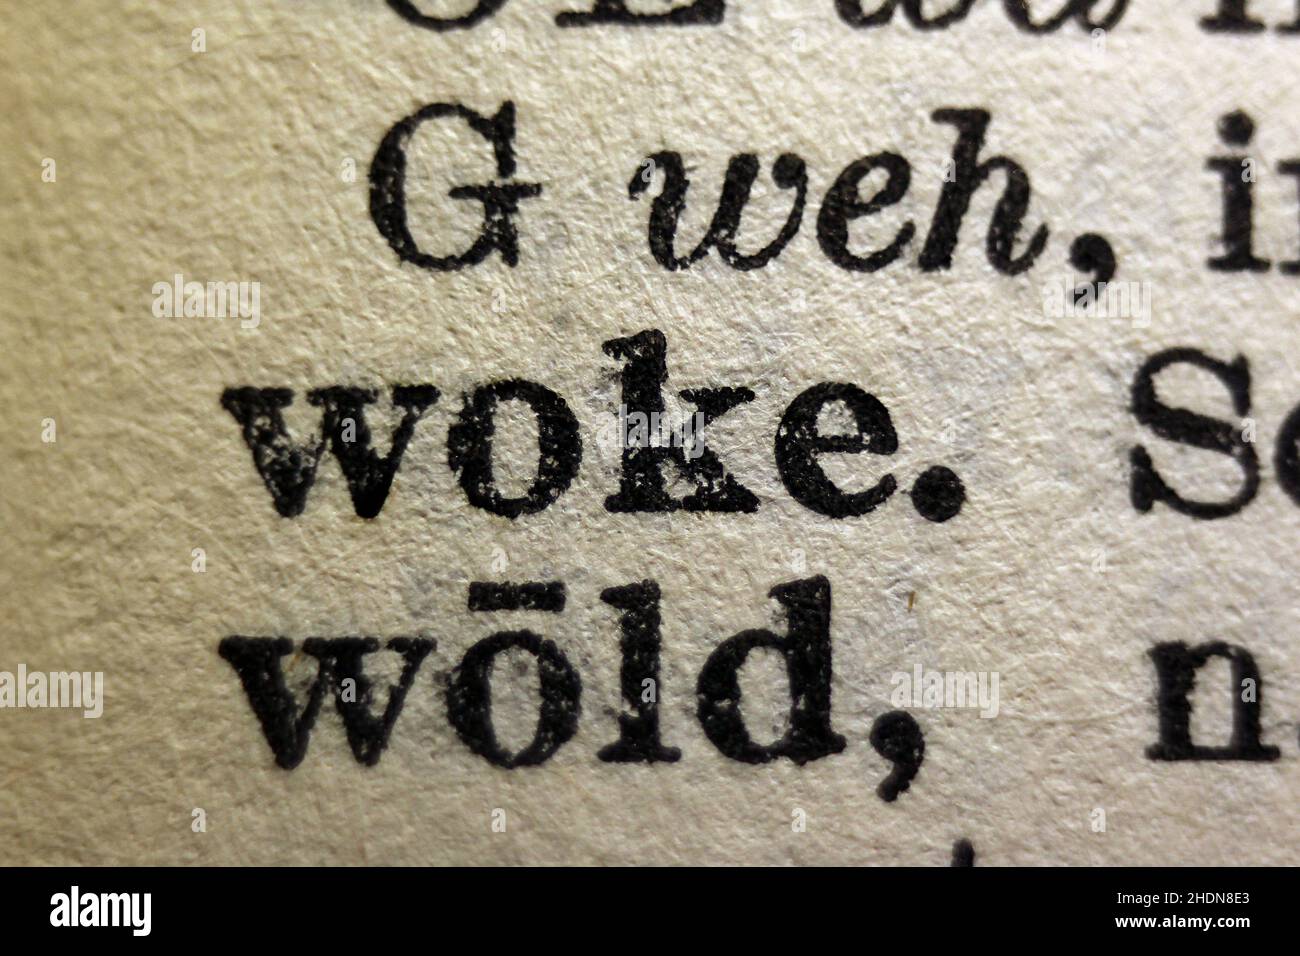 Word 'woke' printed on book page, macro close-upwok Stock Photo